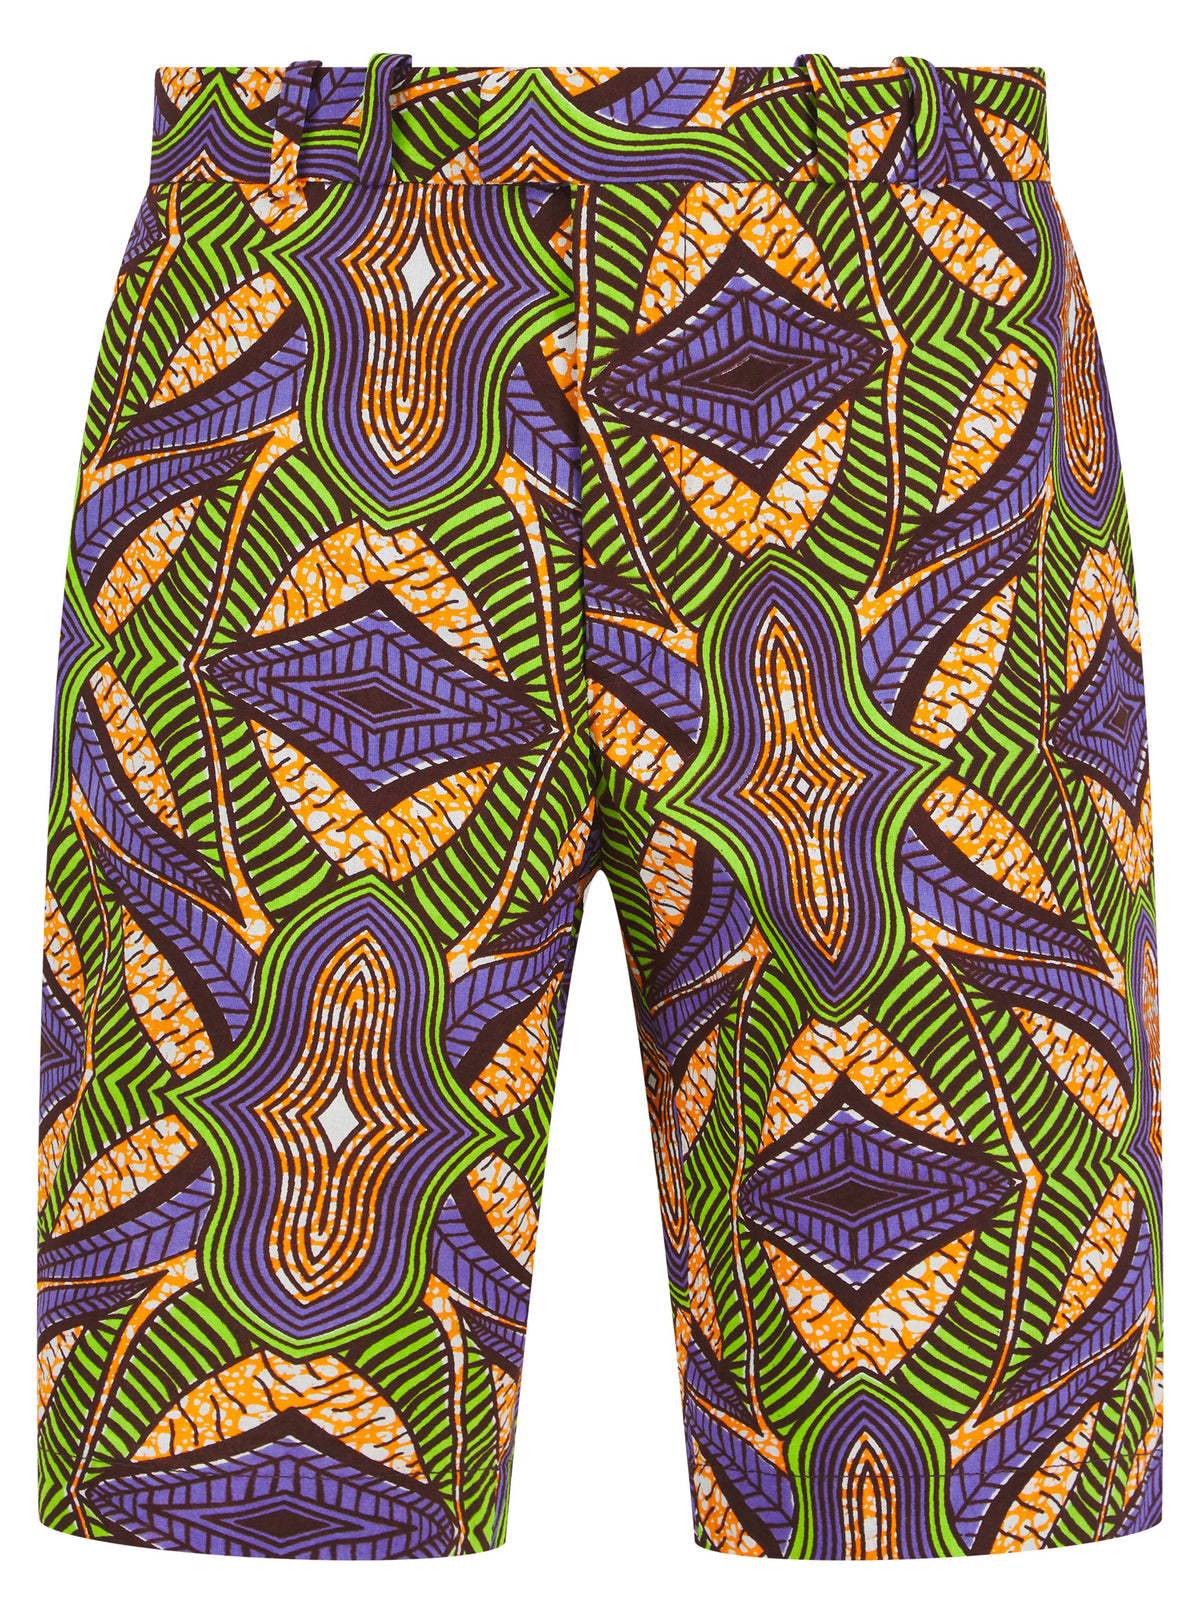 Men's African print shorts